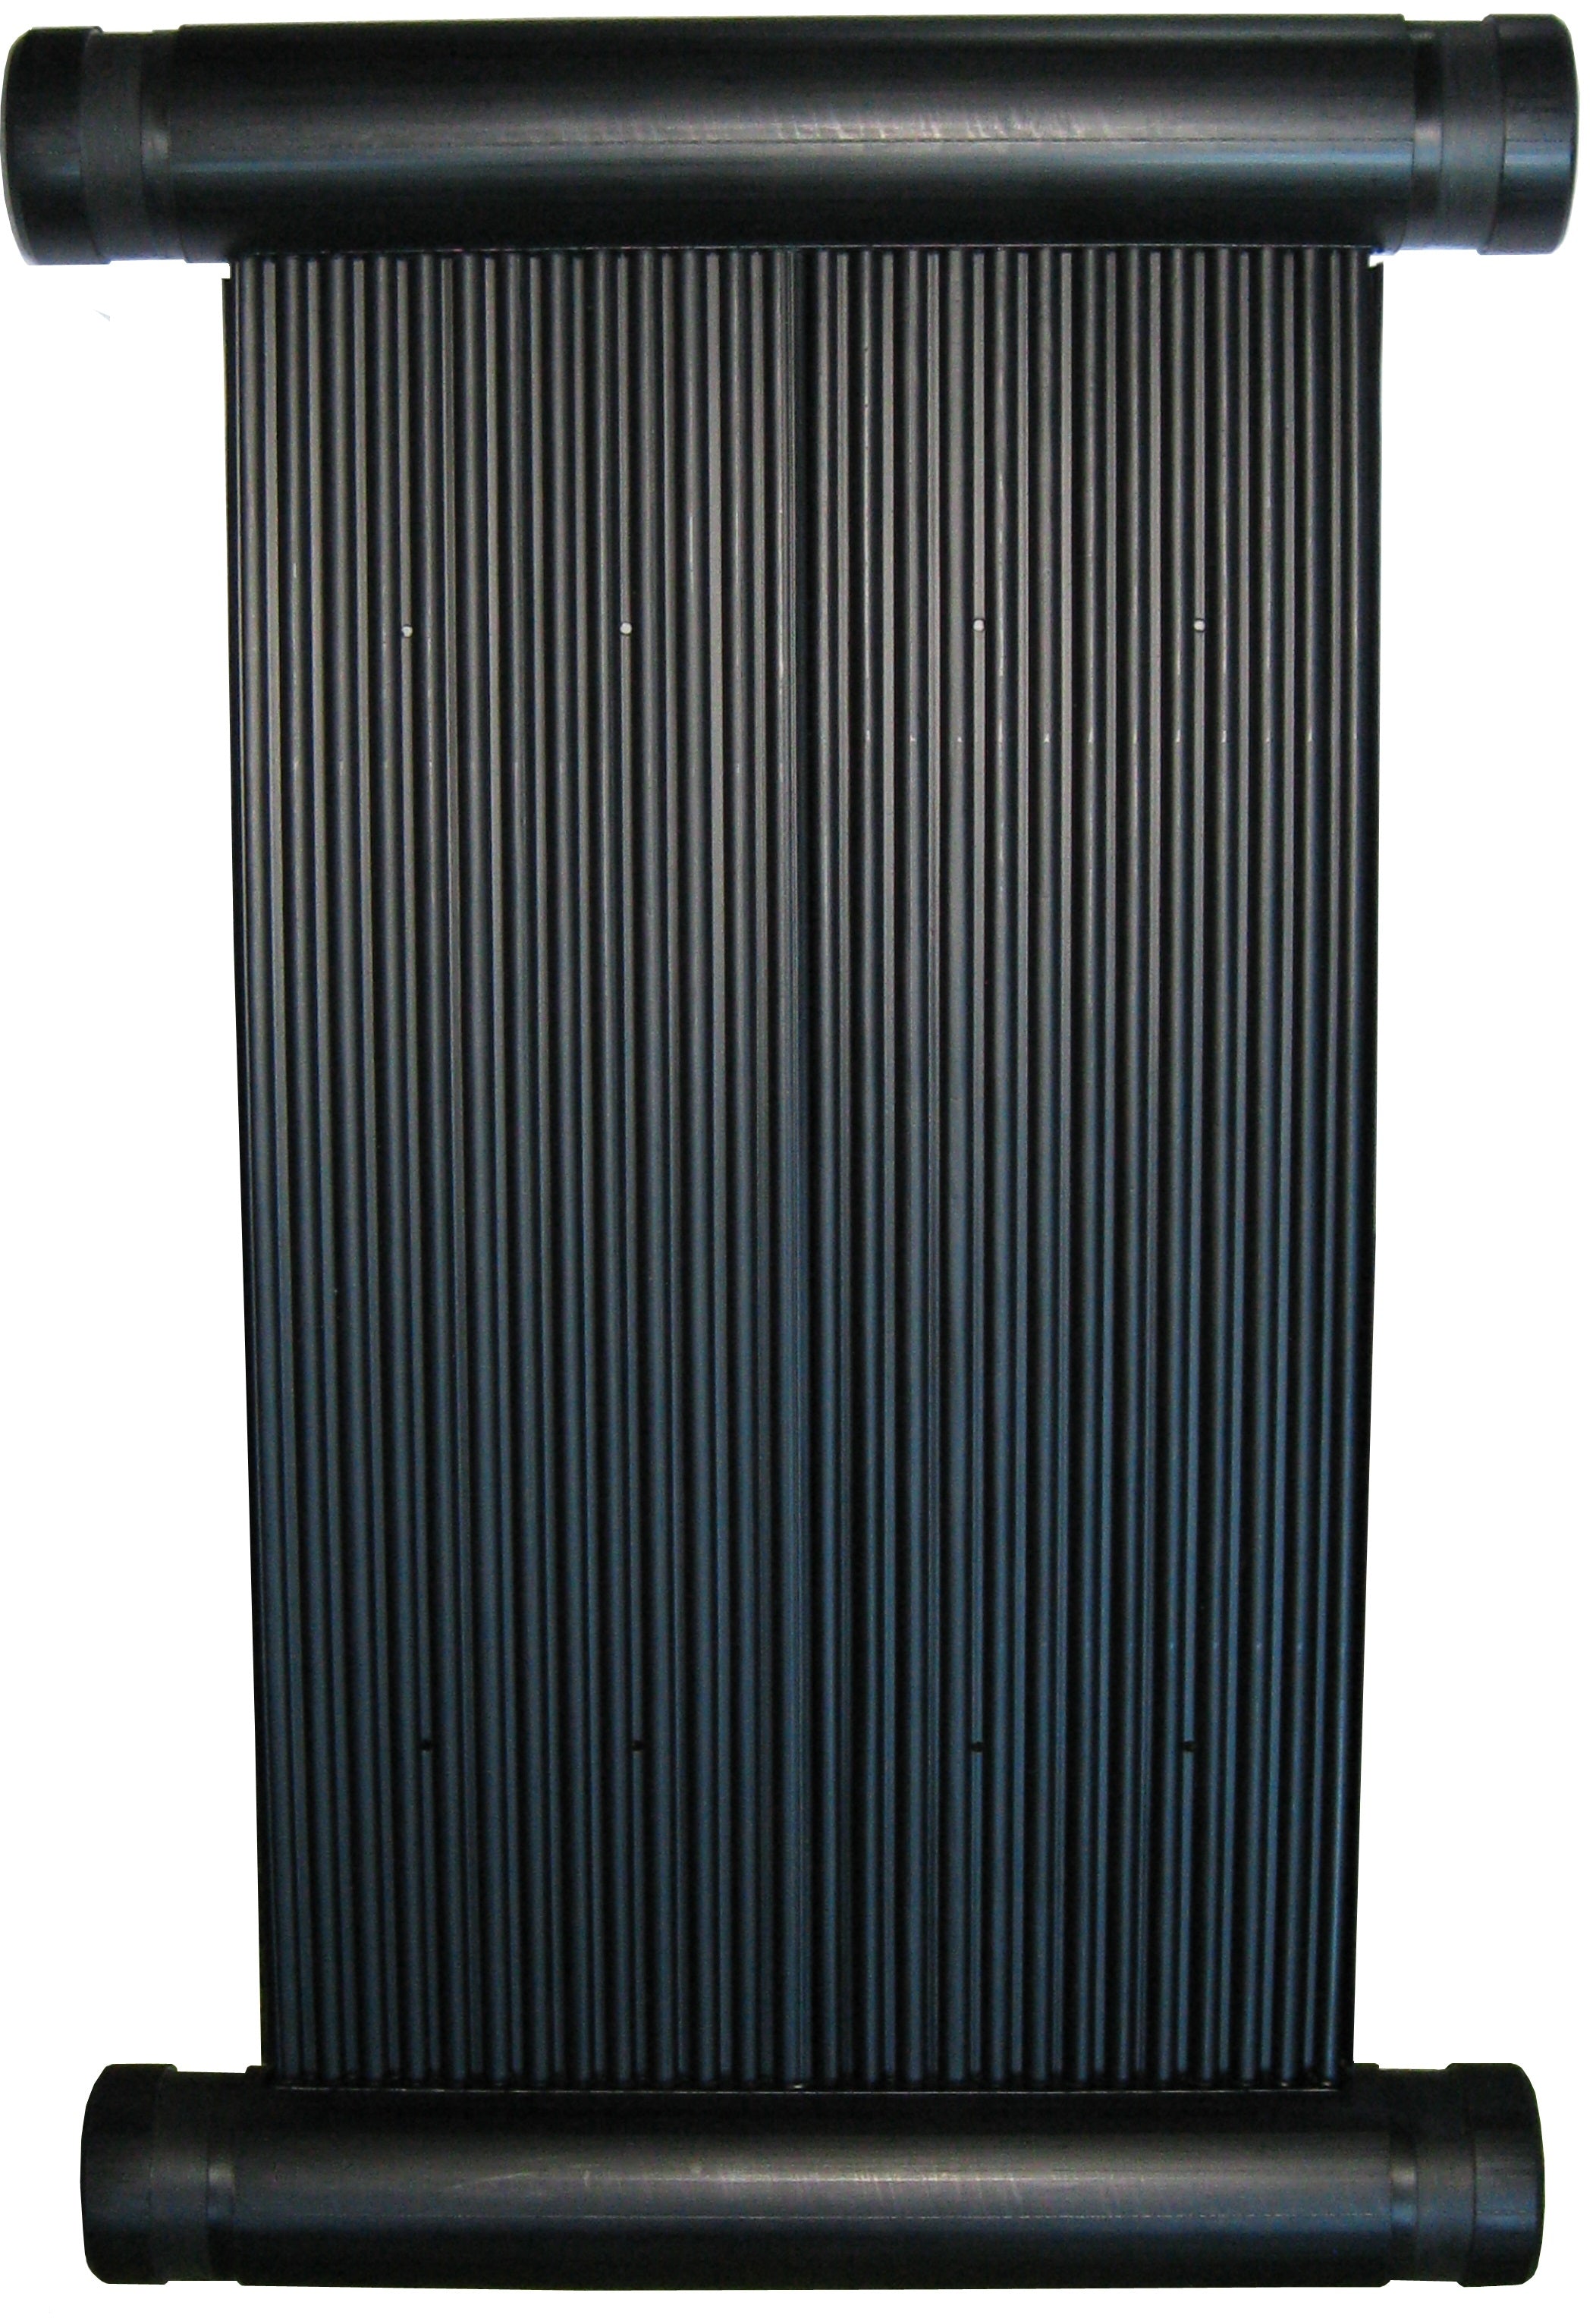 Aquasol Solar Pool Heating Panel 4' X 12' - 2" Headers (Aq48-2)